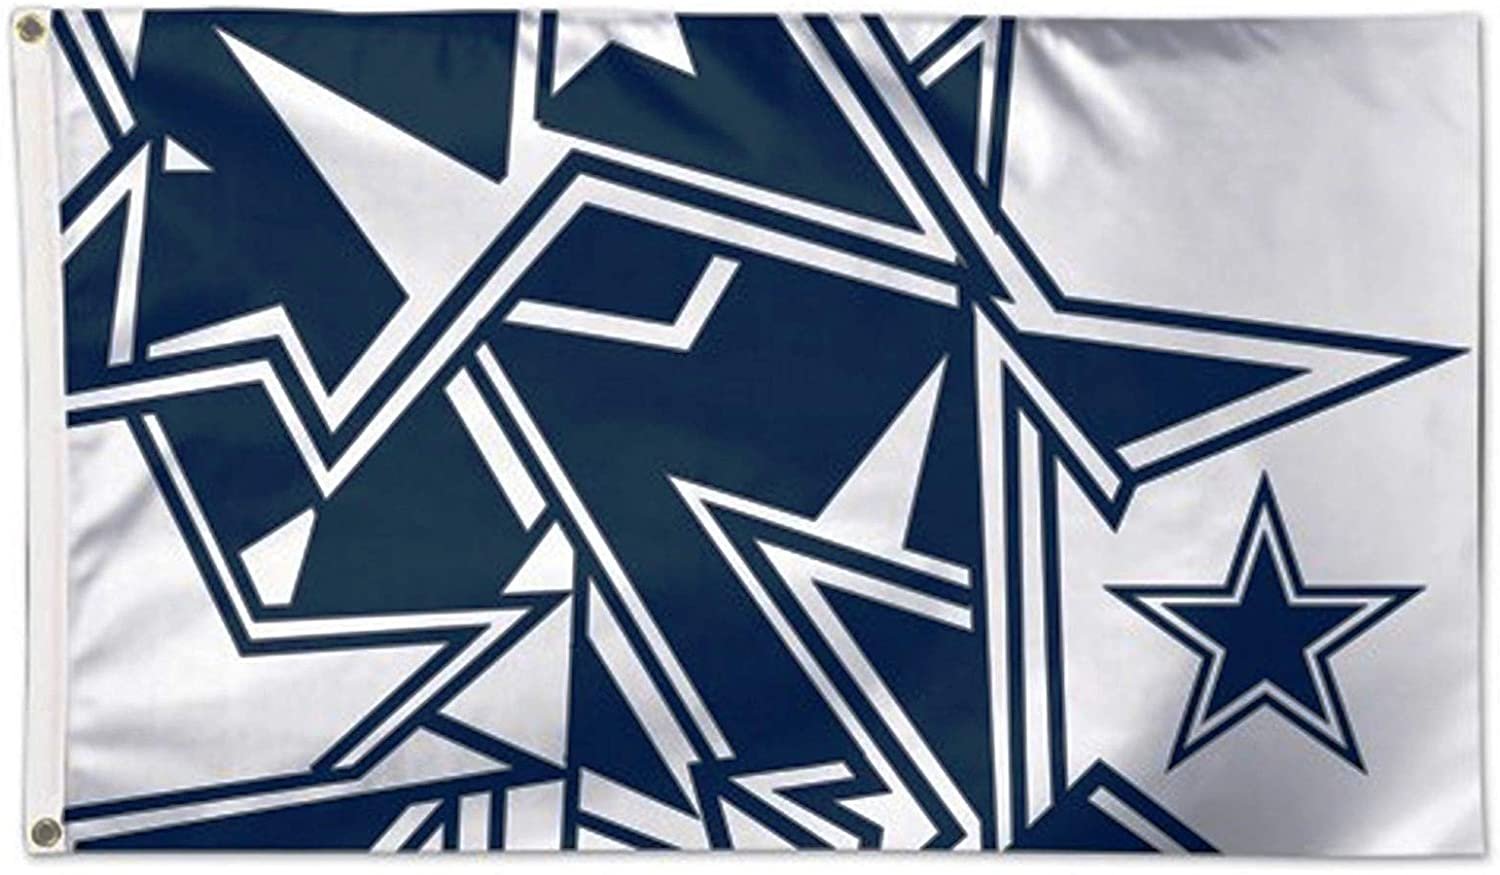 Dallas Cowboys Premium 3x5 Feet Flag Banner, Xfit Design, Metal Grommets, Outdoor Use, Single Sided